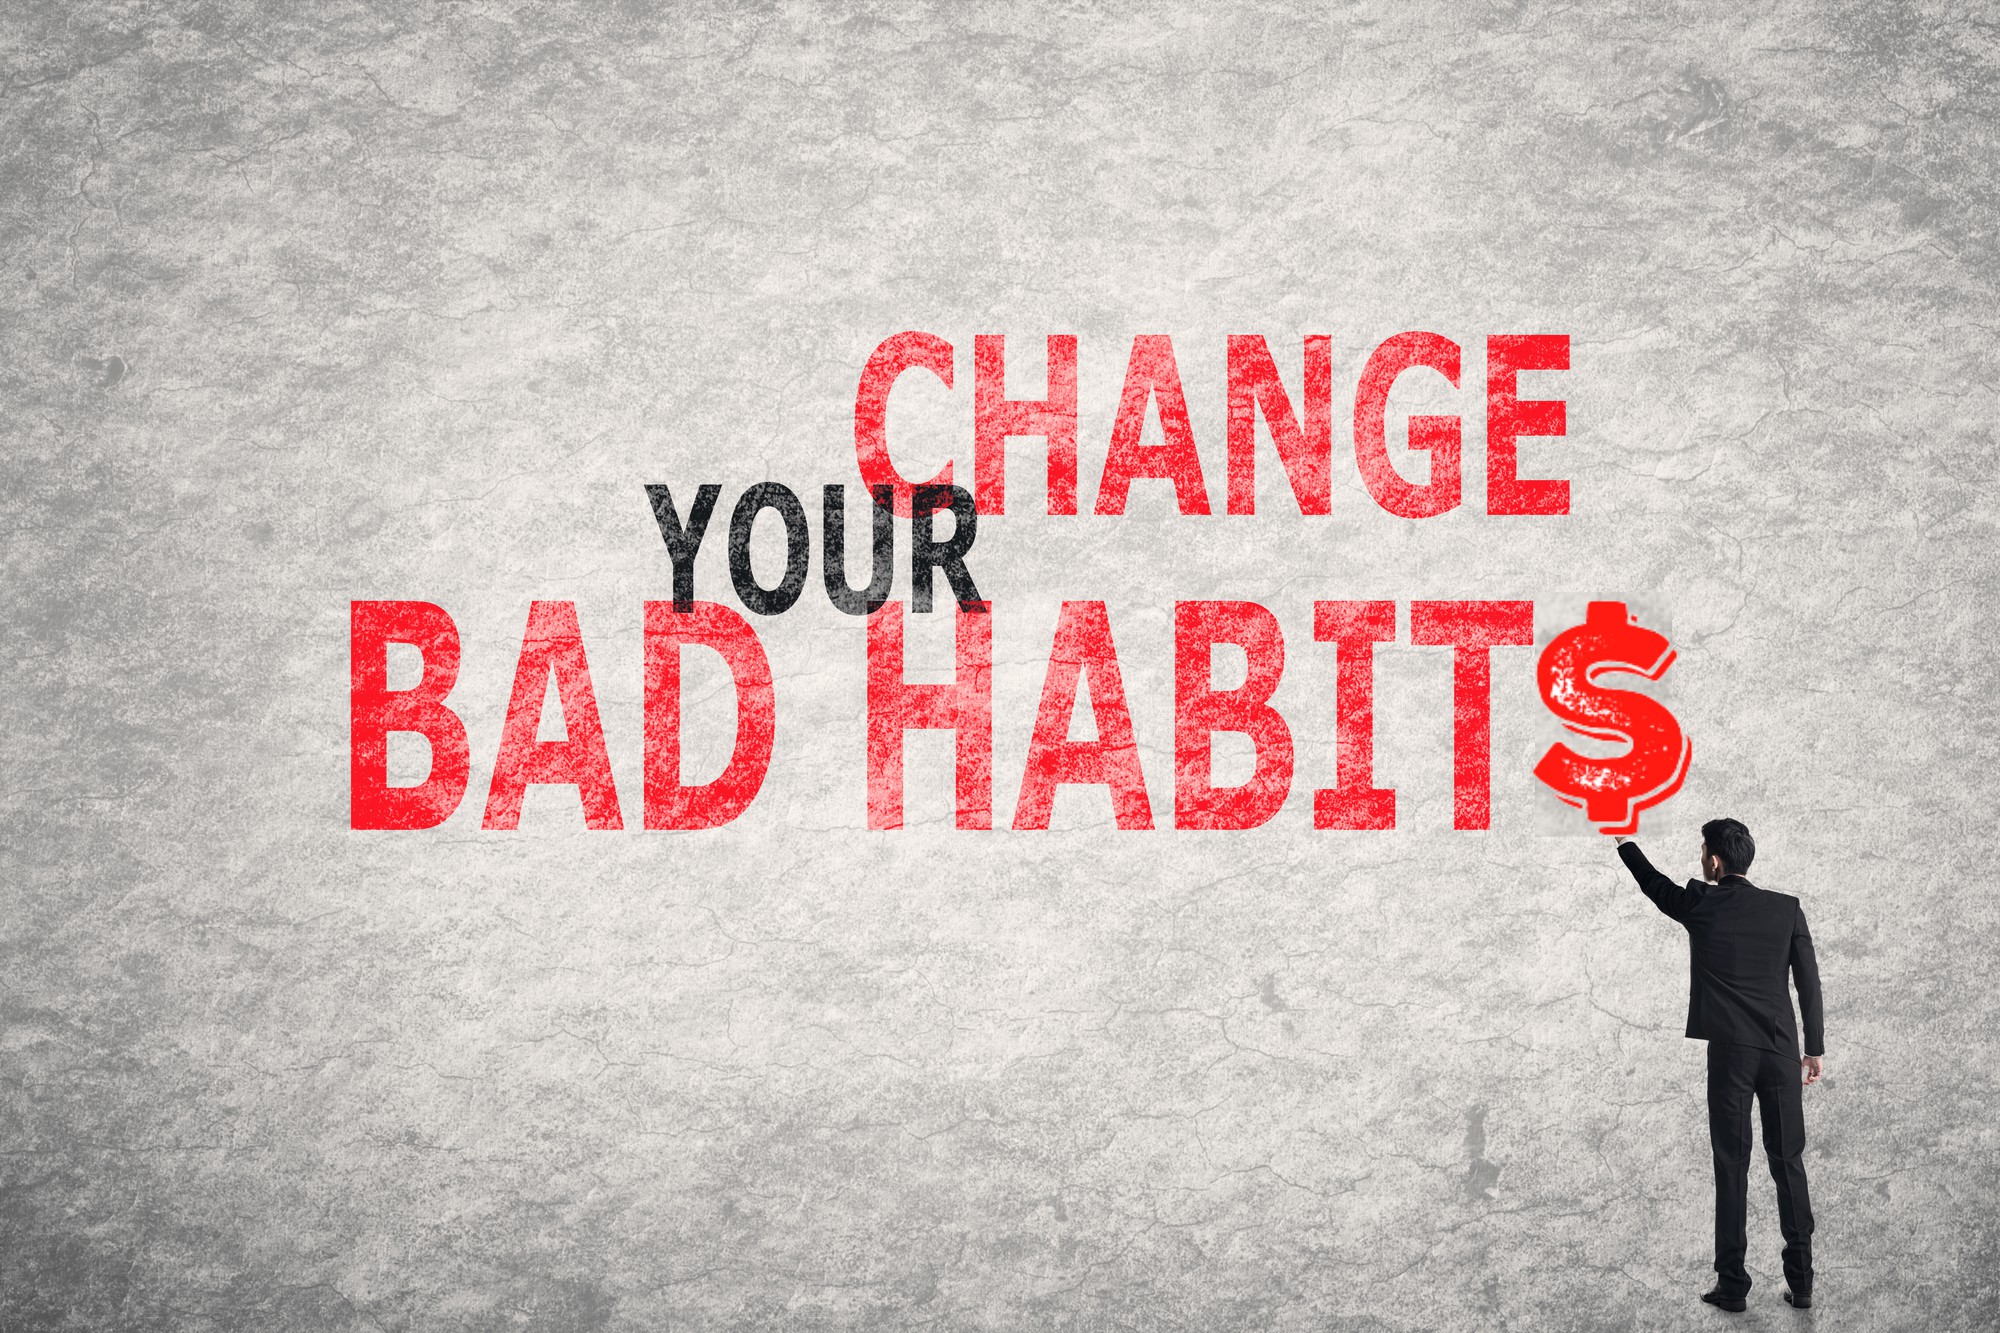 Change your bad habits poster